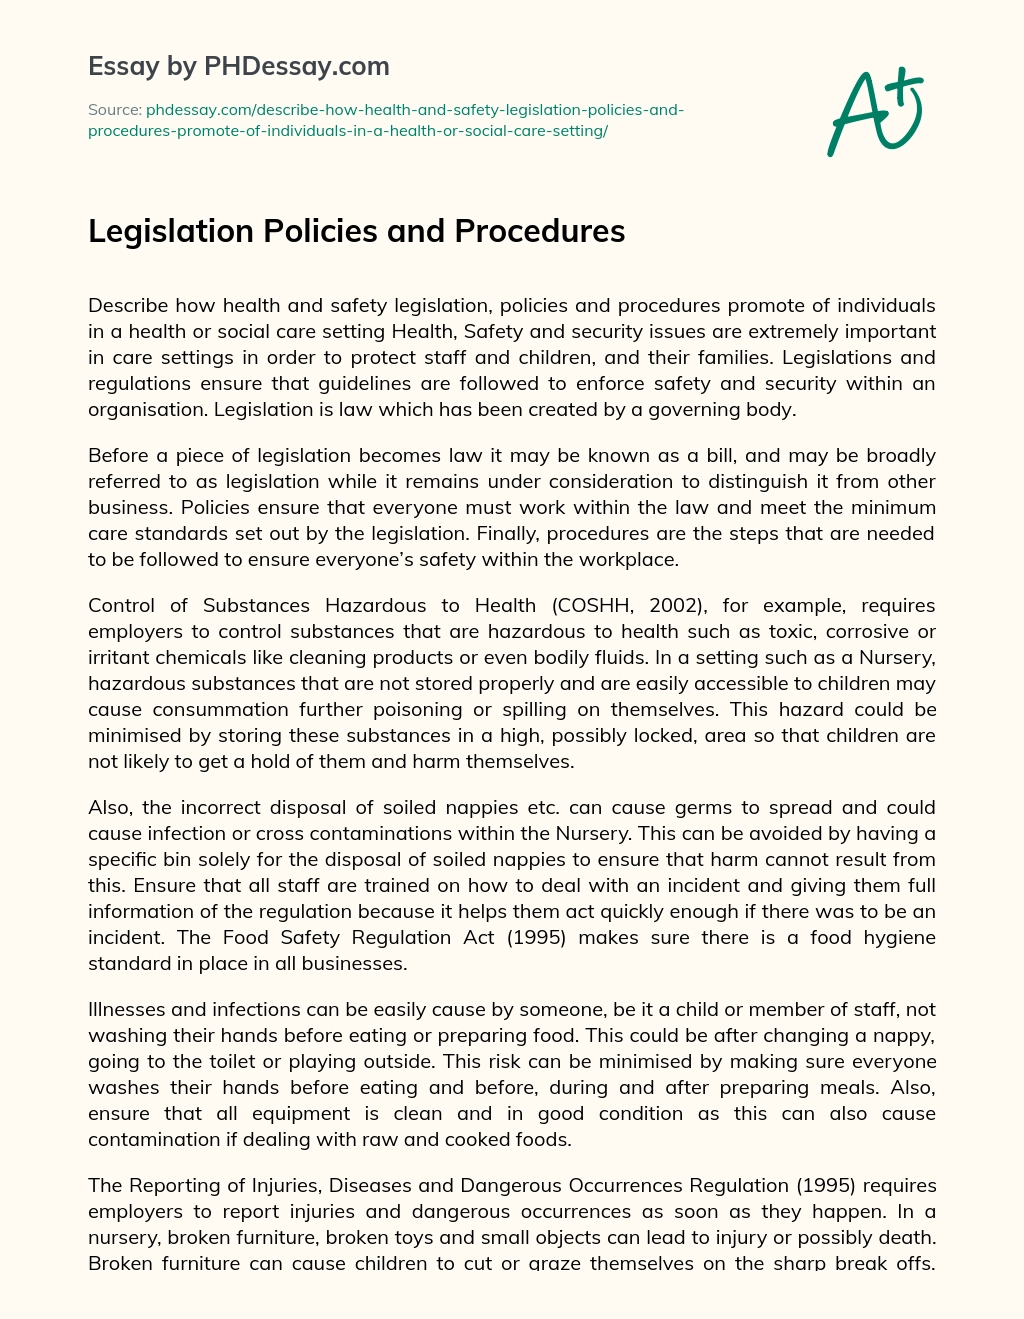 Legislation Policies and Procedures essay